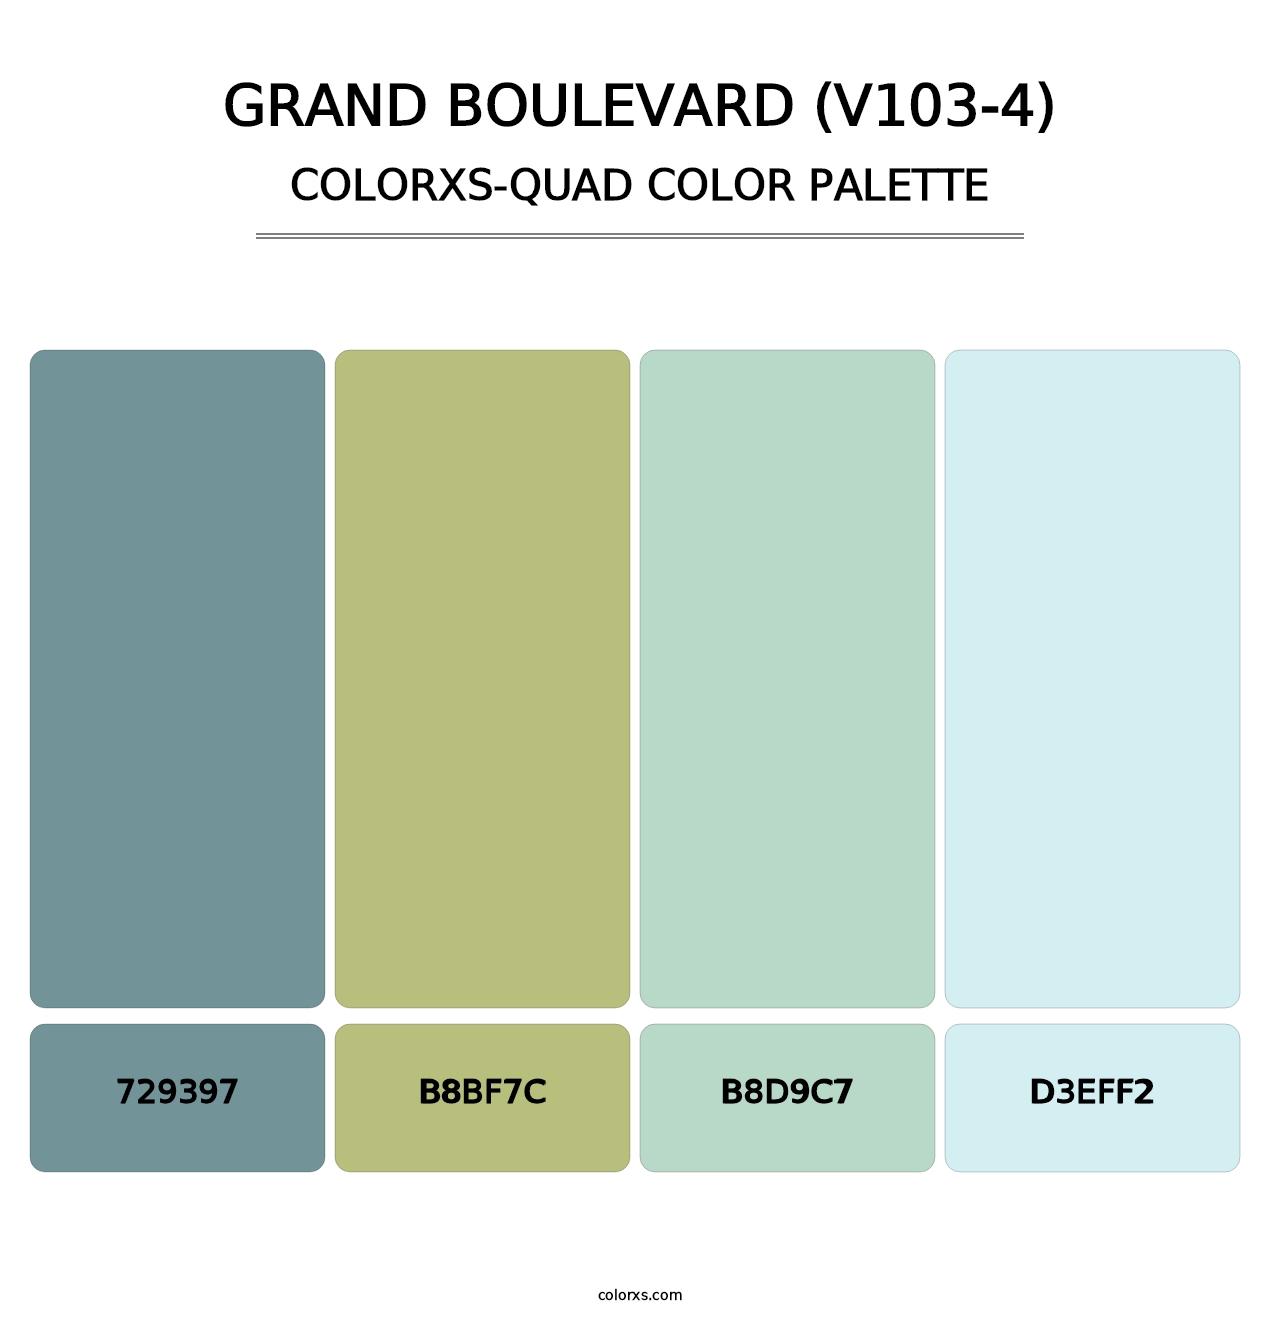 Grand Boulevard (V103-4) - Colorxs Quad Palette